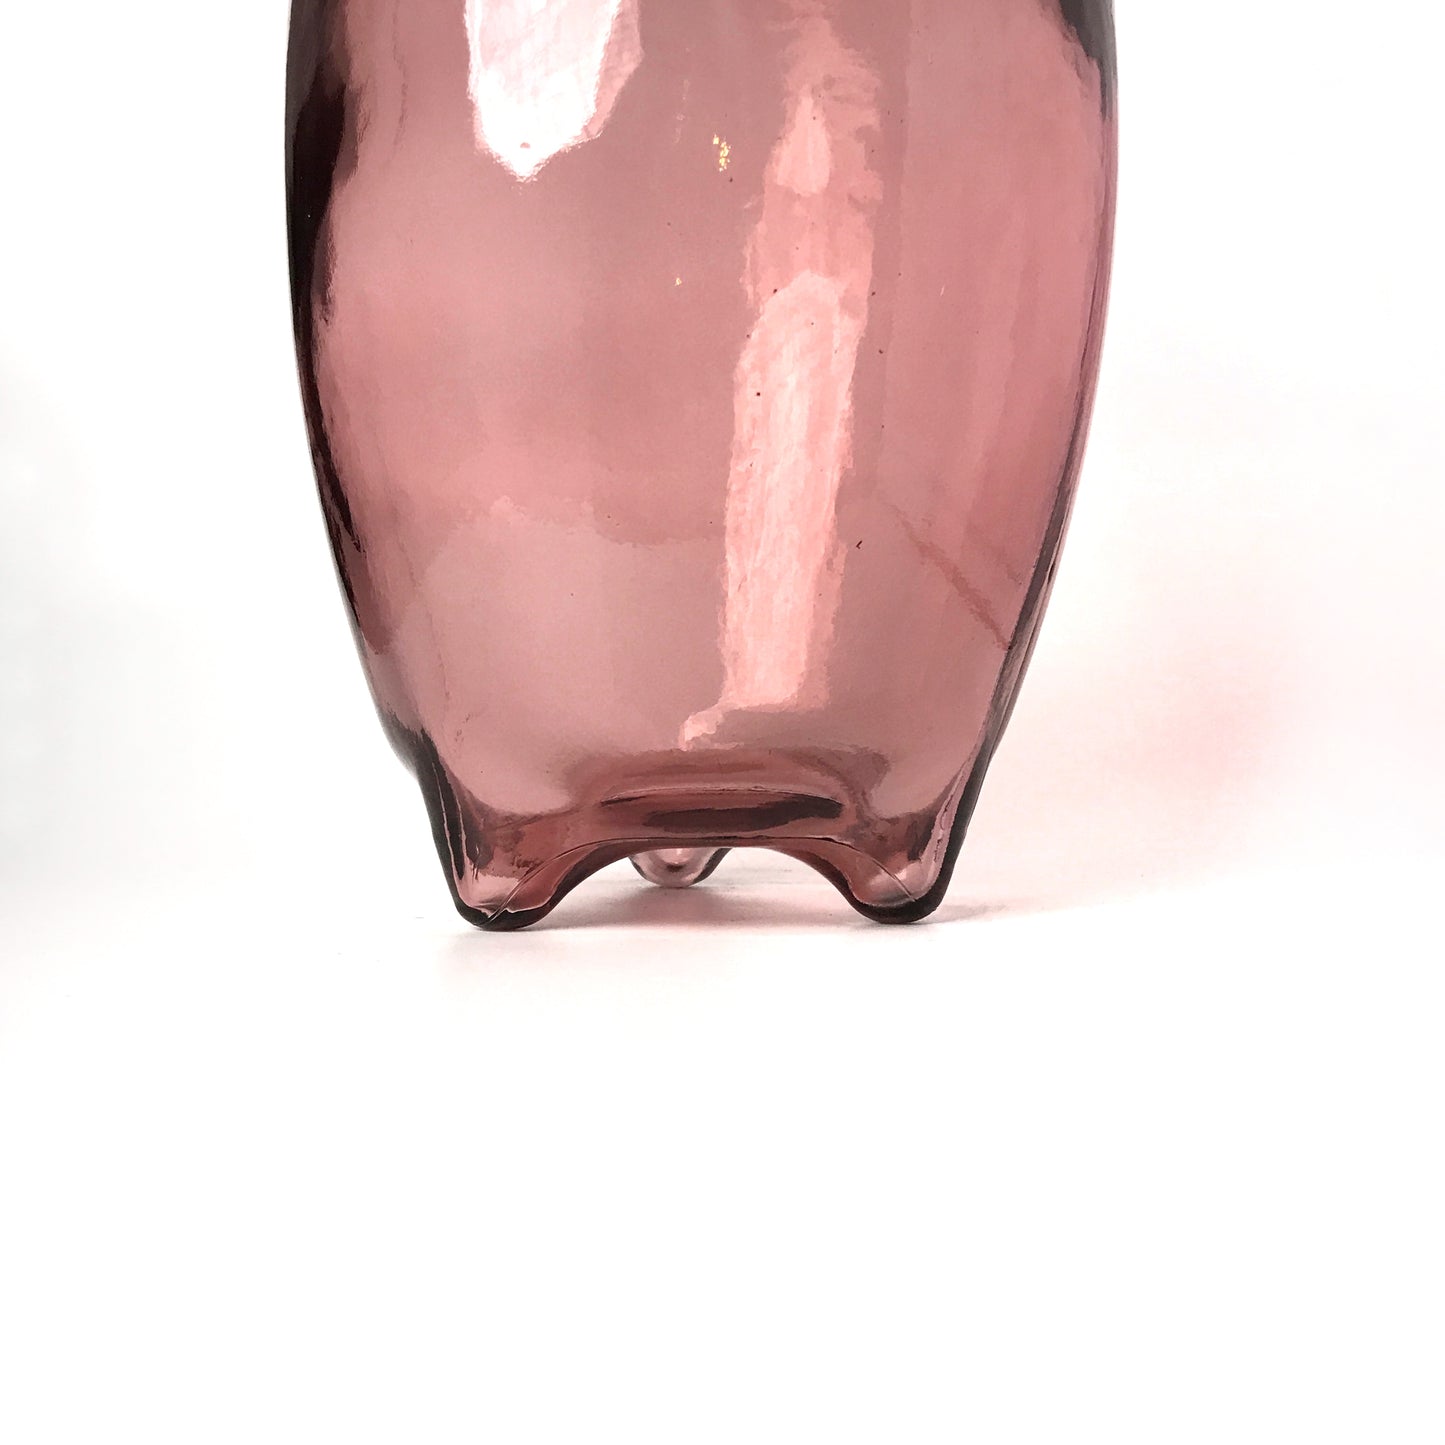 Patas Glass Vase Tall